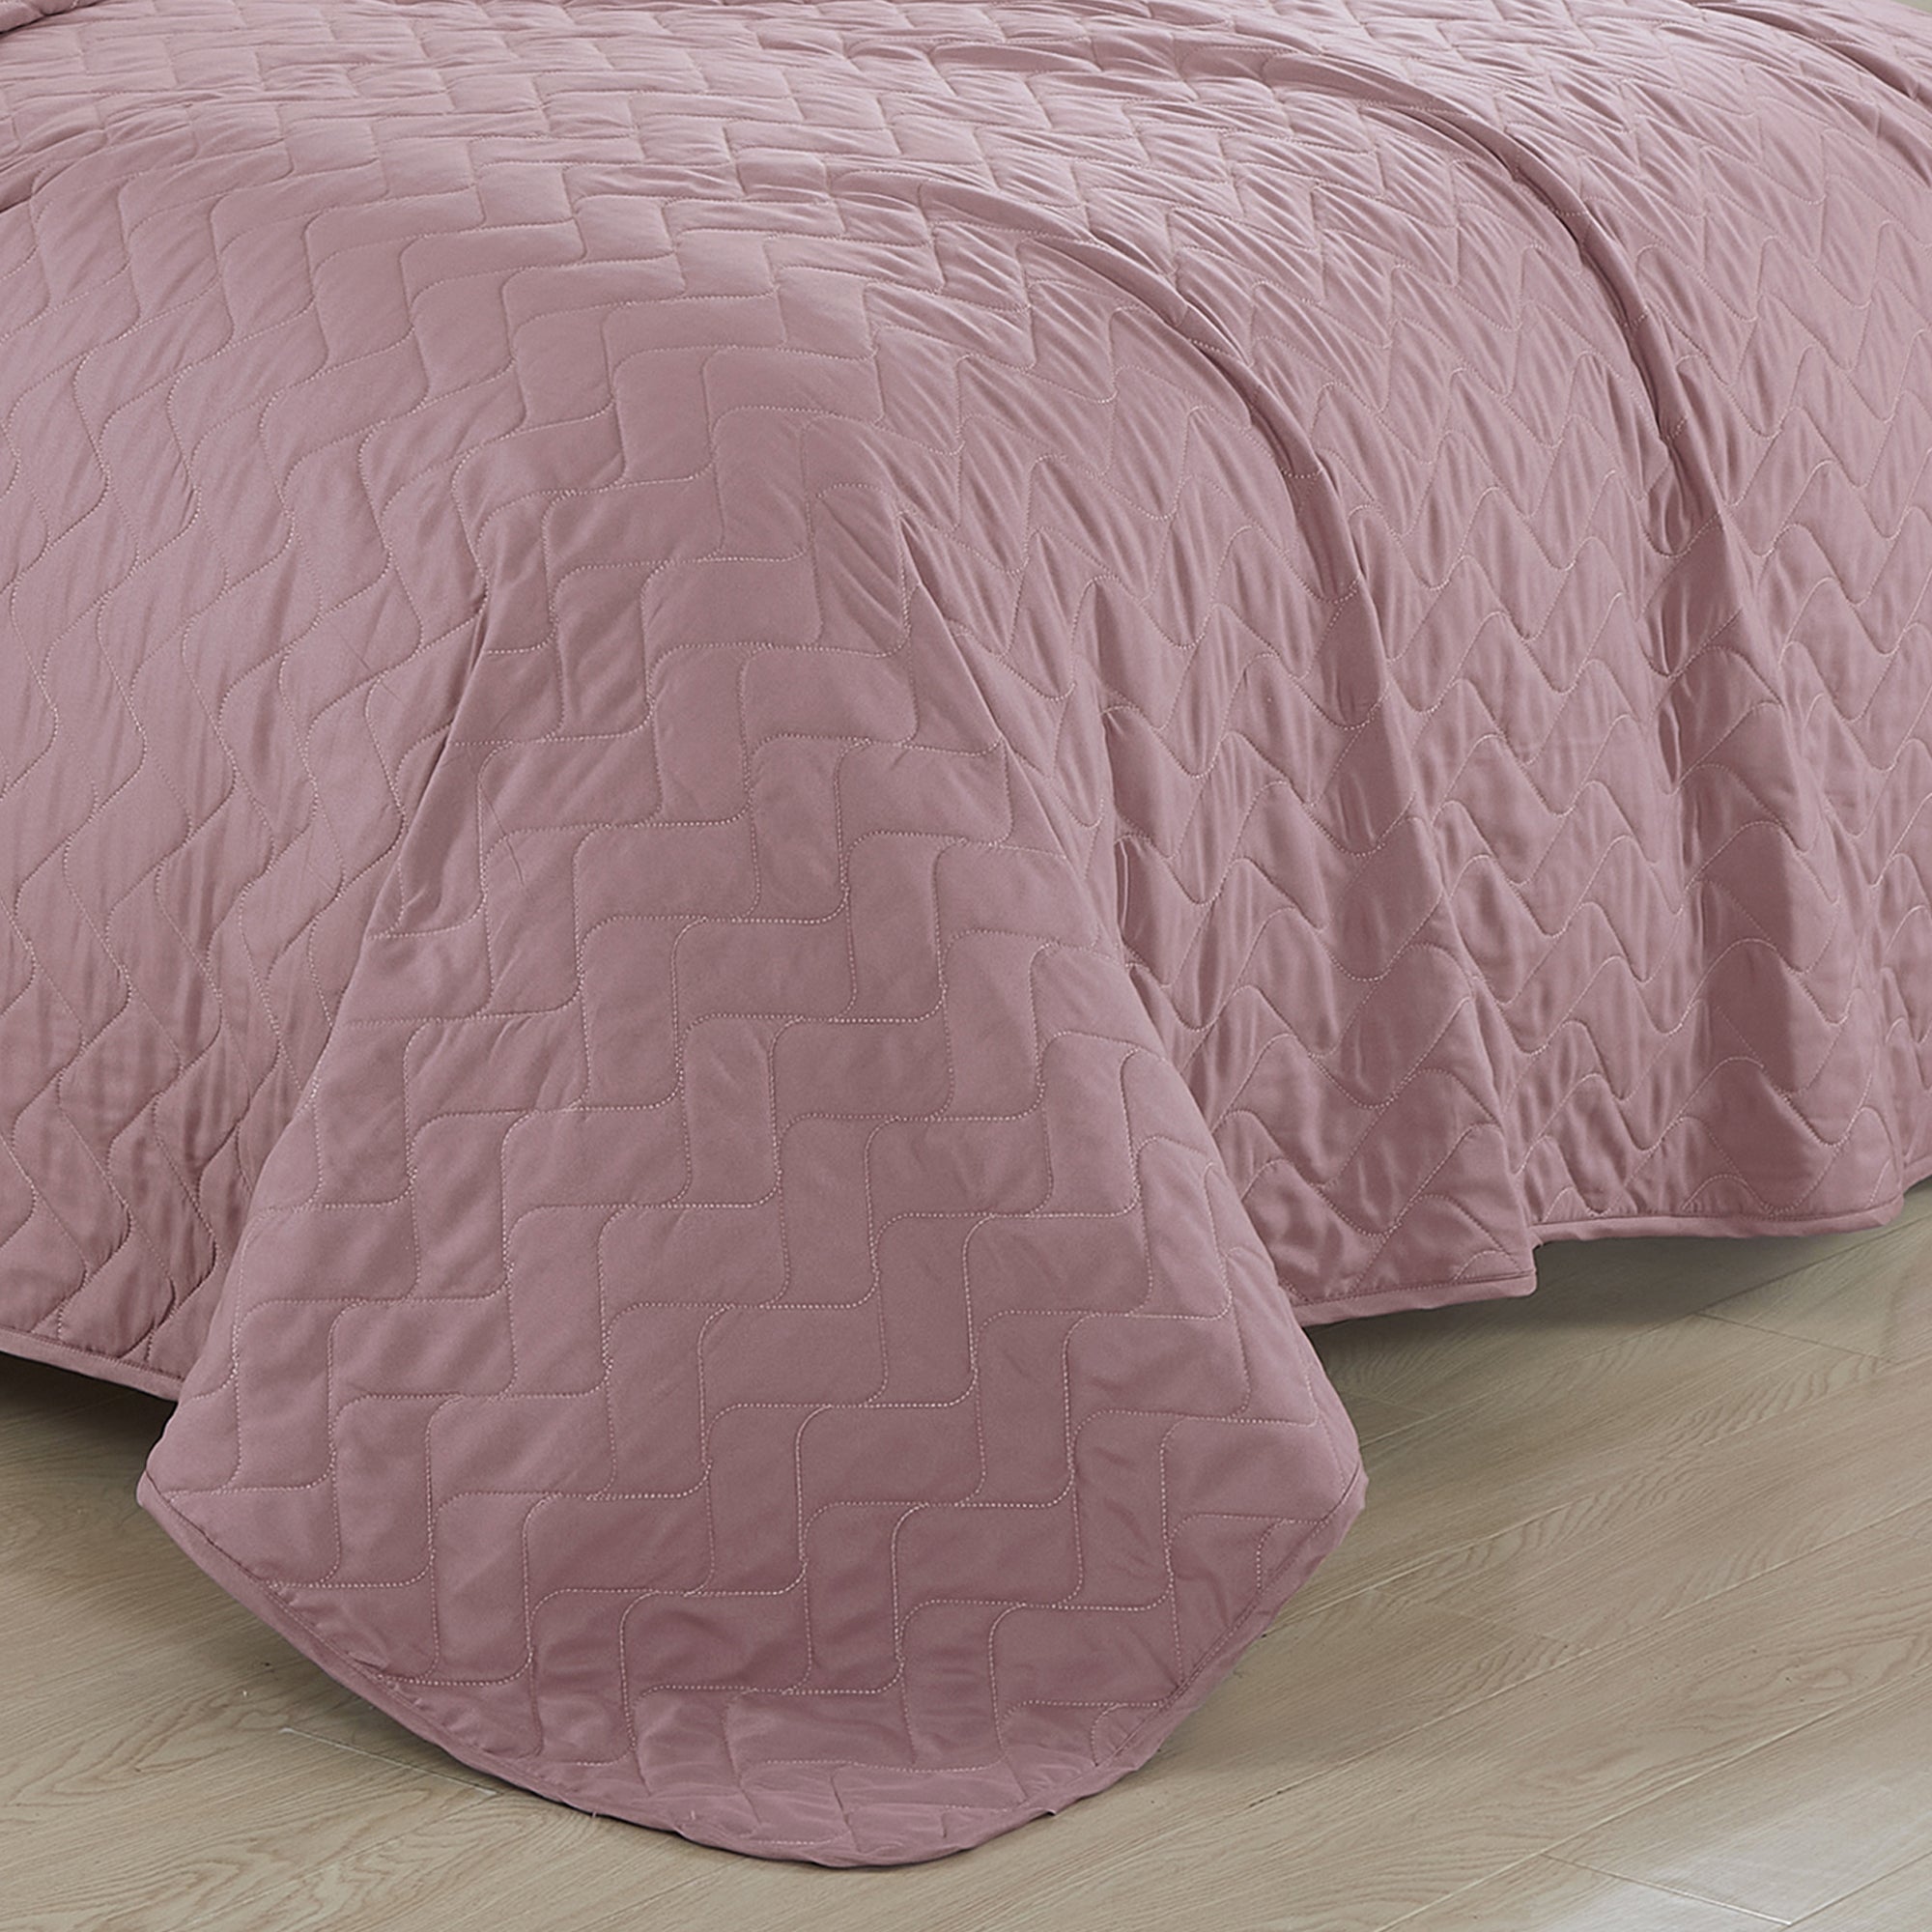 3 Piece Solid Quilt Set Lightweight Bedspread Set Emre 2024